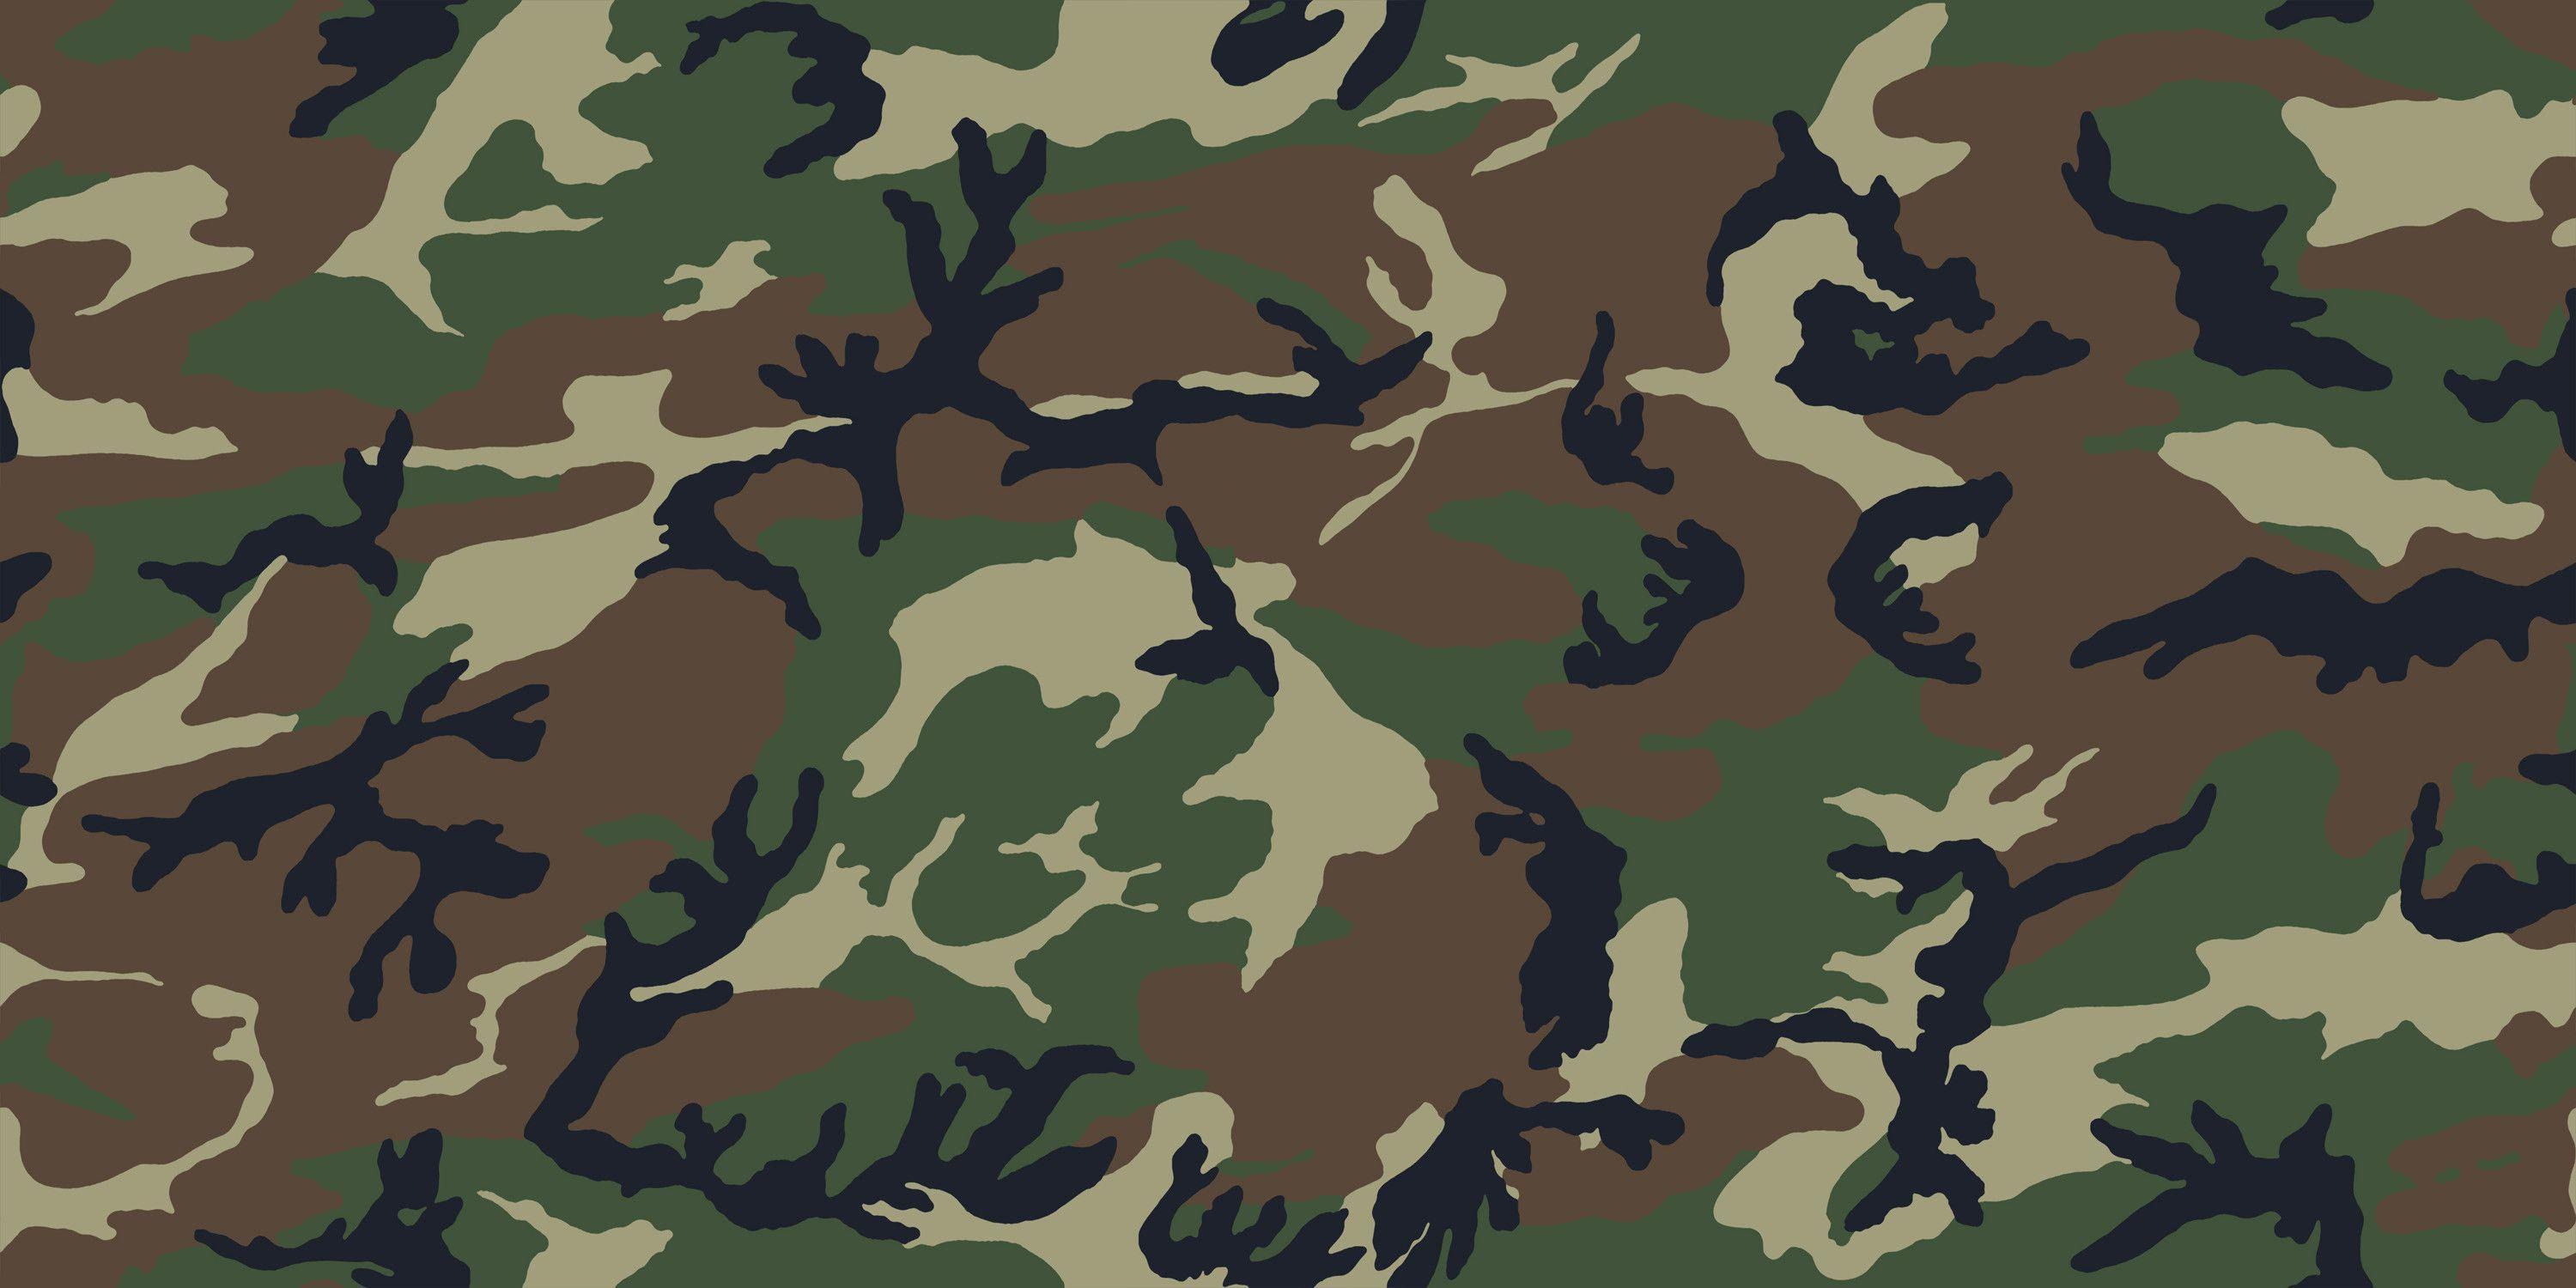 Free Army Camo Wallpaper, Live Army Camo Wallpaper, CBE89 Army Camo